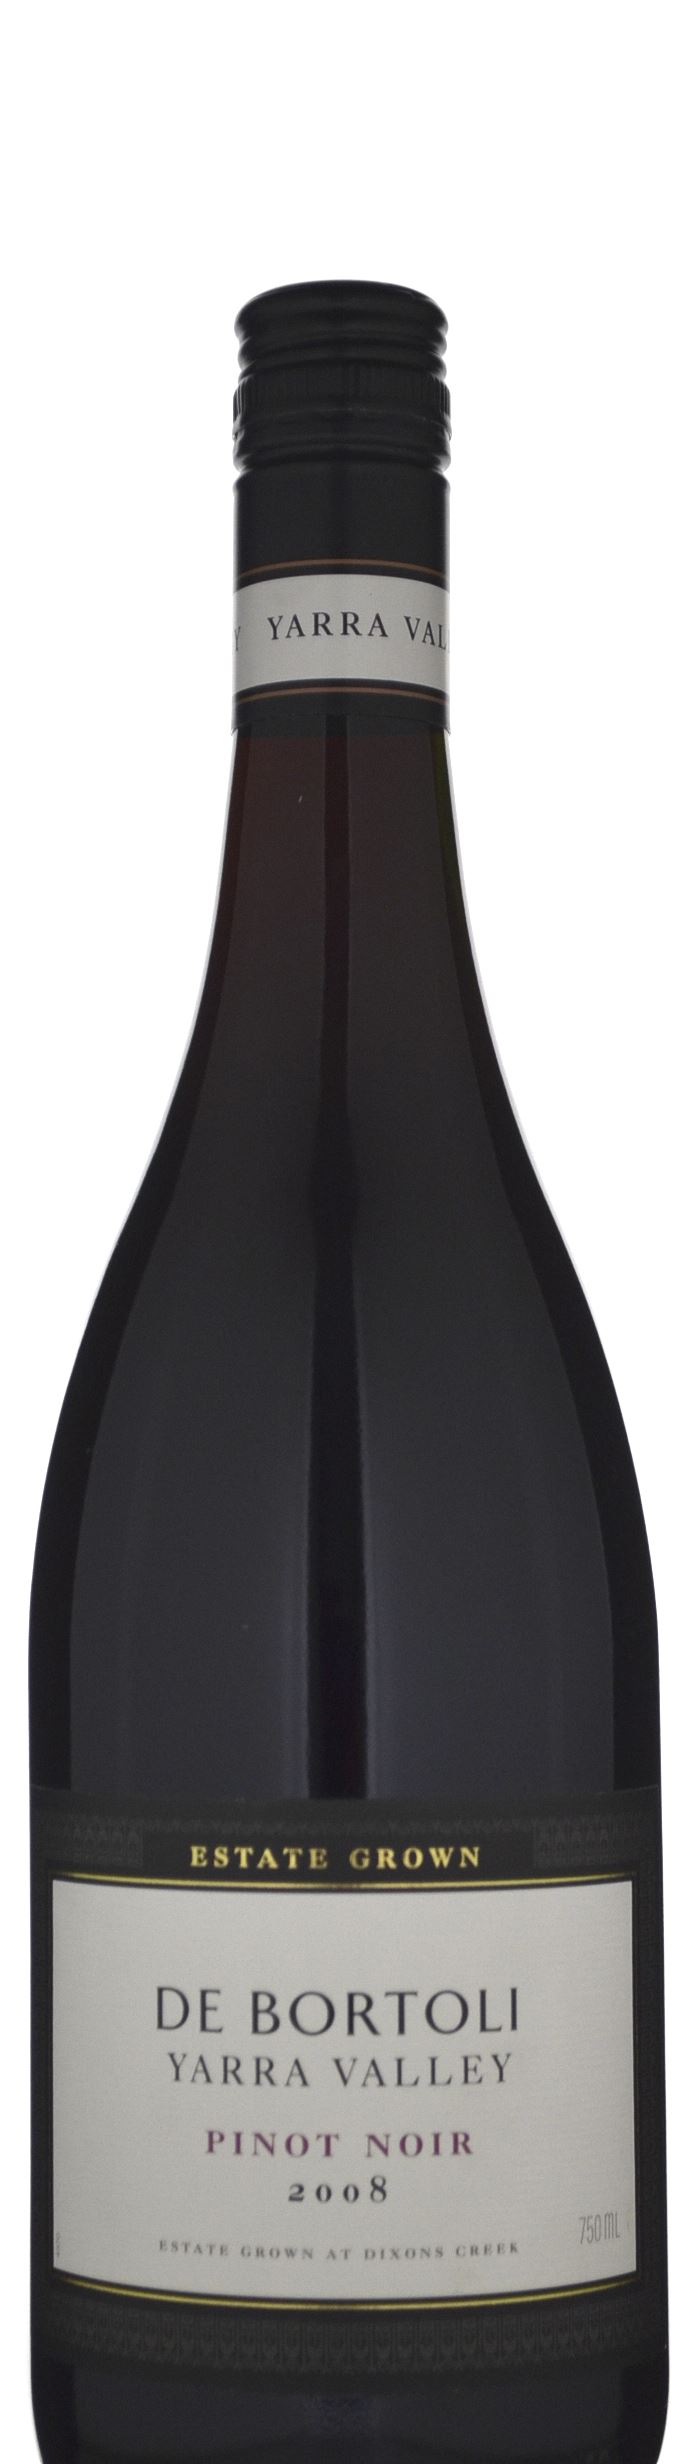 De Bortoli Yarra Valley Pinot Noir 2008 » $50.00 ( in stock) | Cellarit